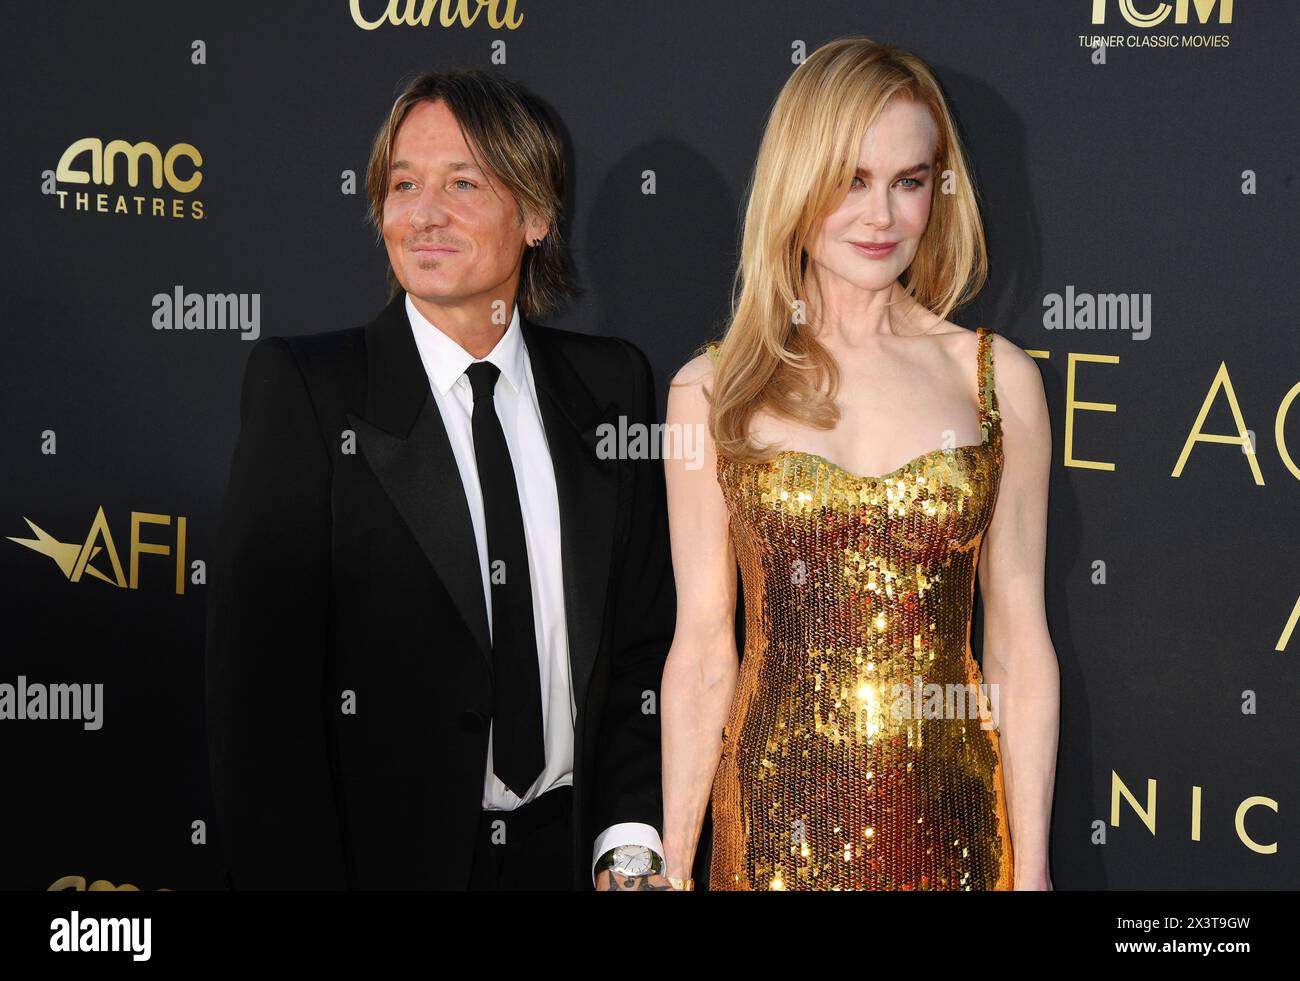 HOLLYWOOD, CALIFORNIA - APRILE 27: (L-R) Keith Urban e Nicole Kidman partecipano al 49° AFI Lifetime Achievement Award Gala Tribute che celebra Nicole K. Foto Stock